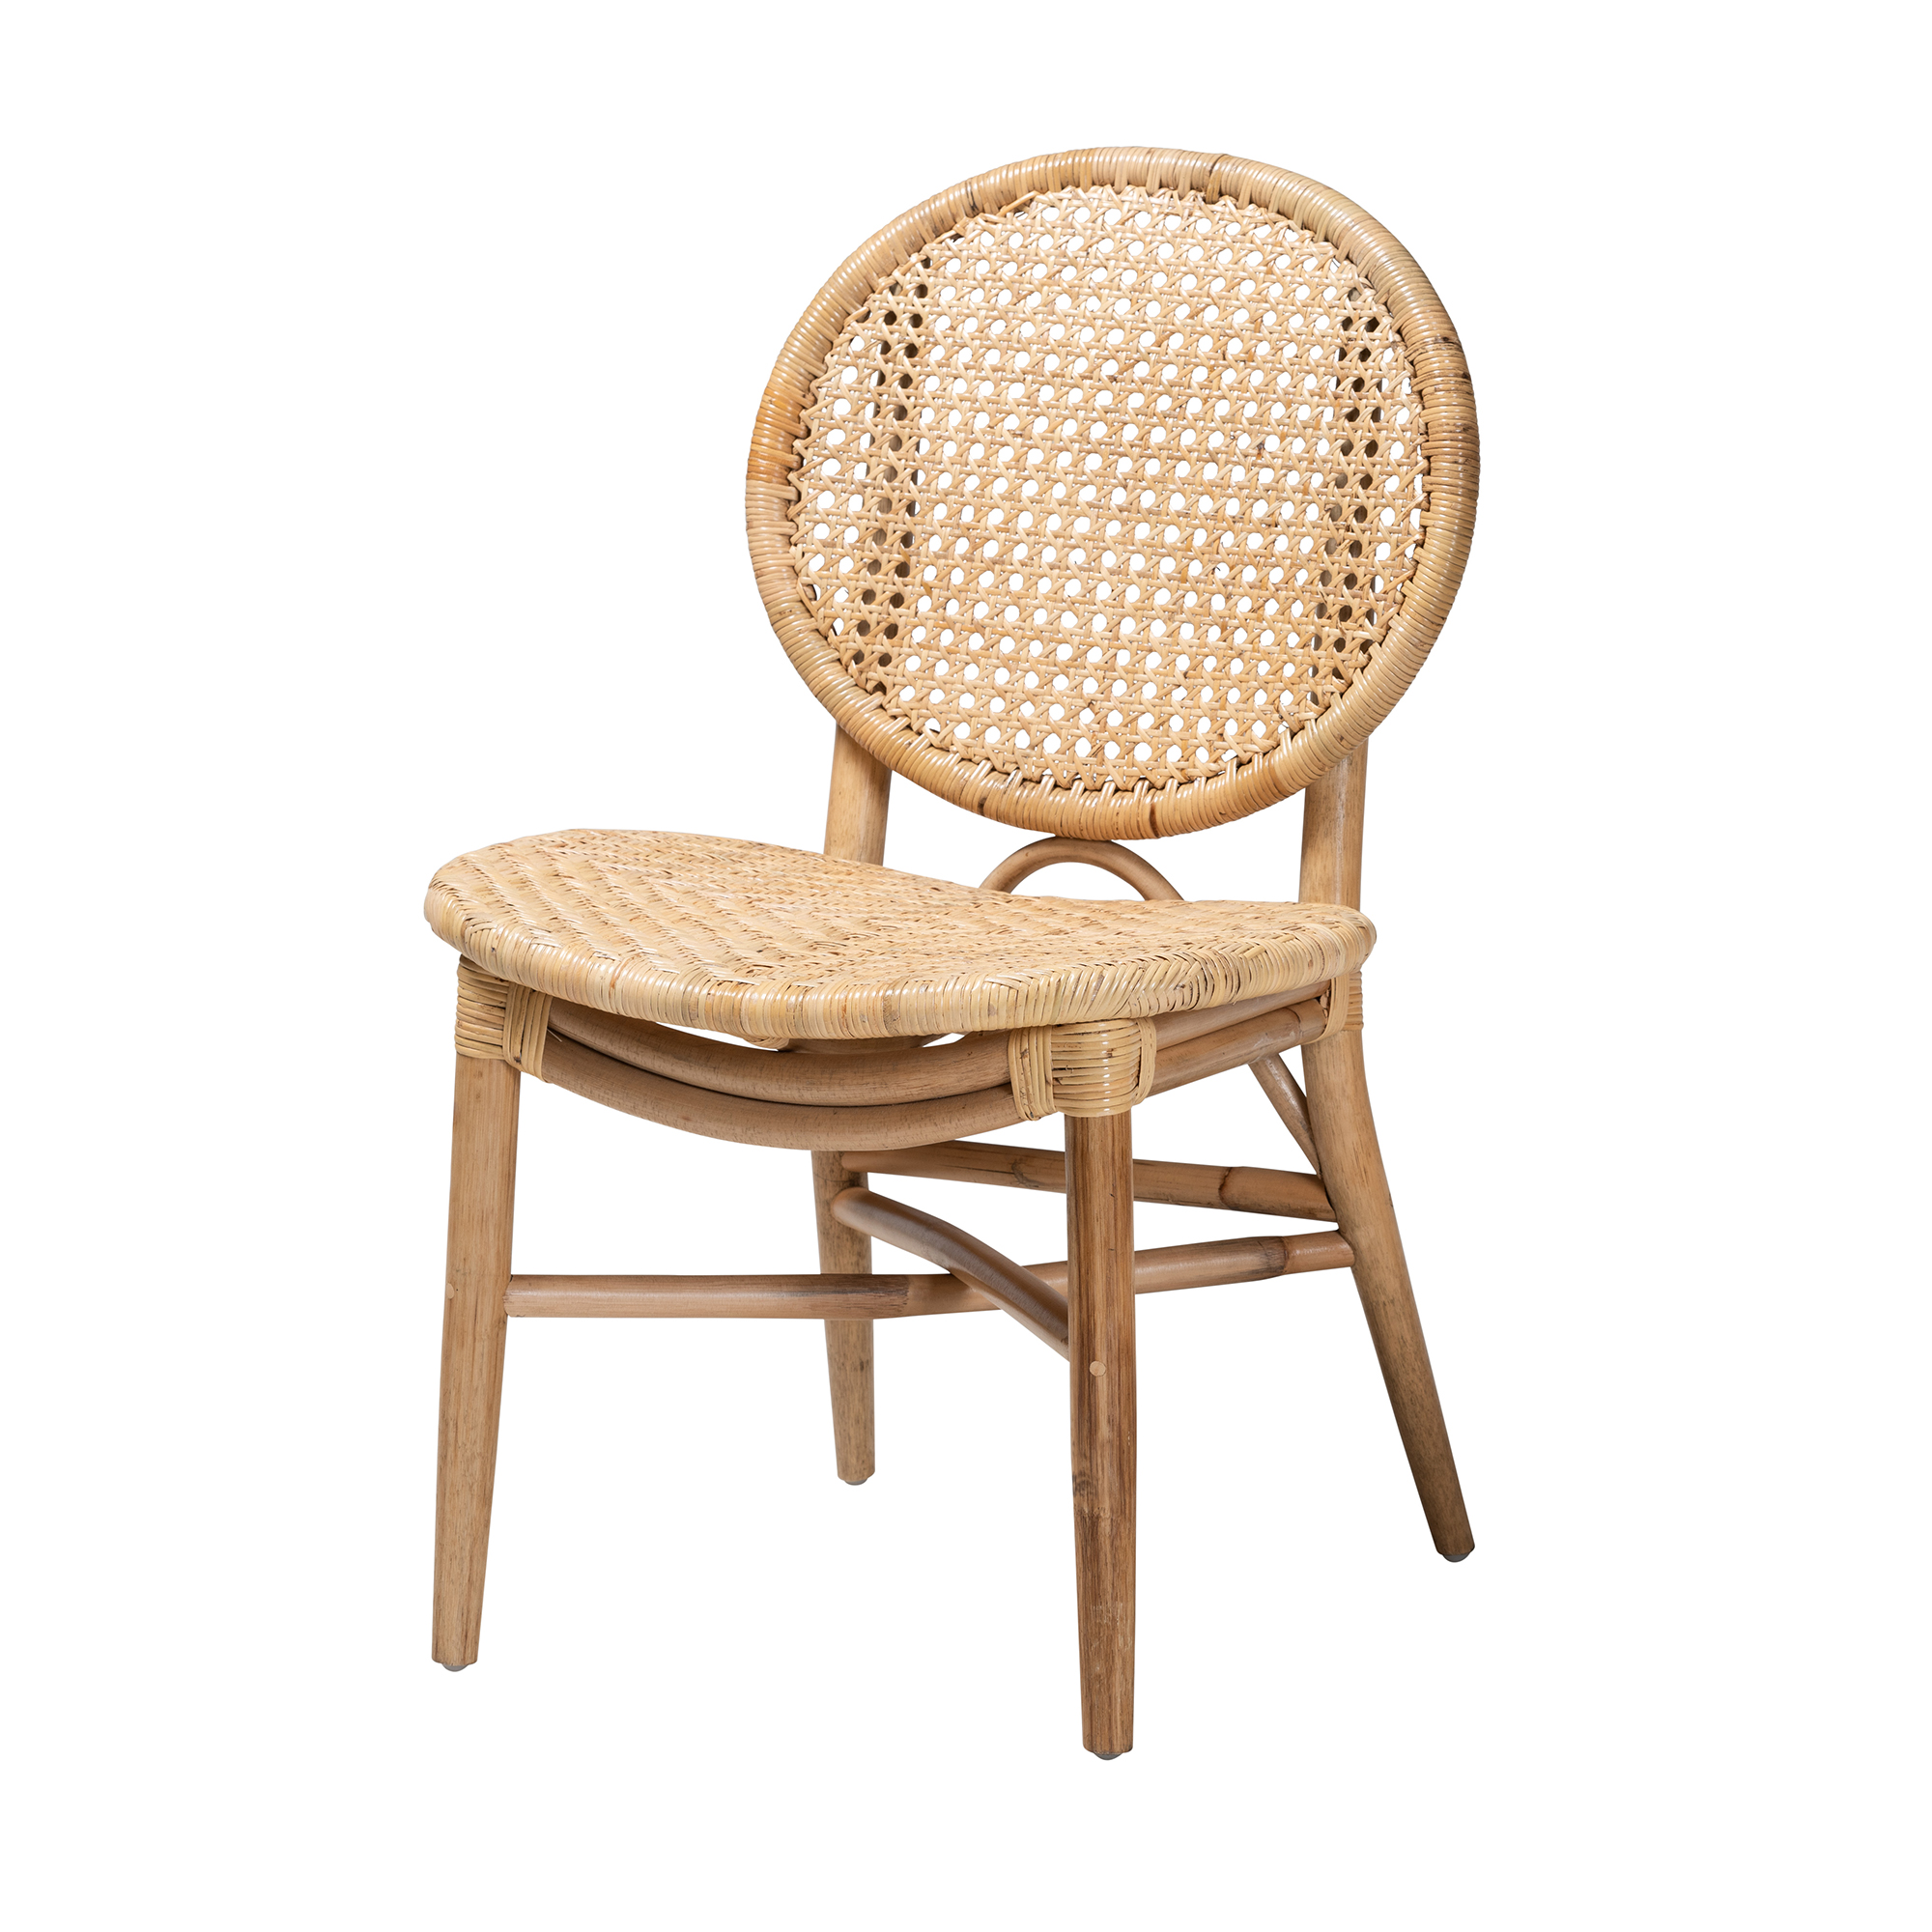 bali & pari Osaka Rattan BOHO Dining Chair, Natural Brown - image 2 of 9